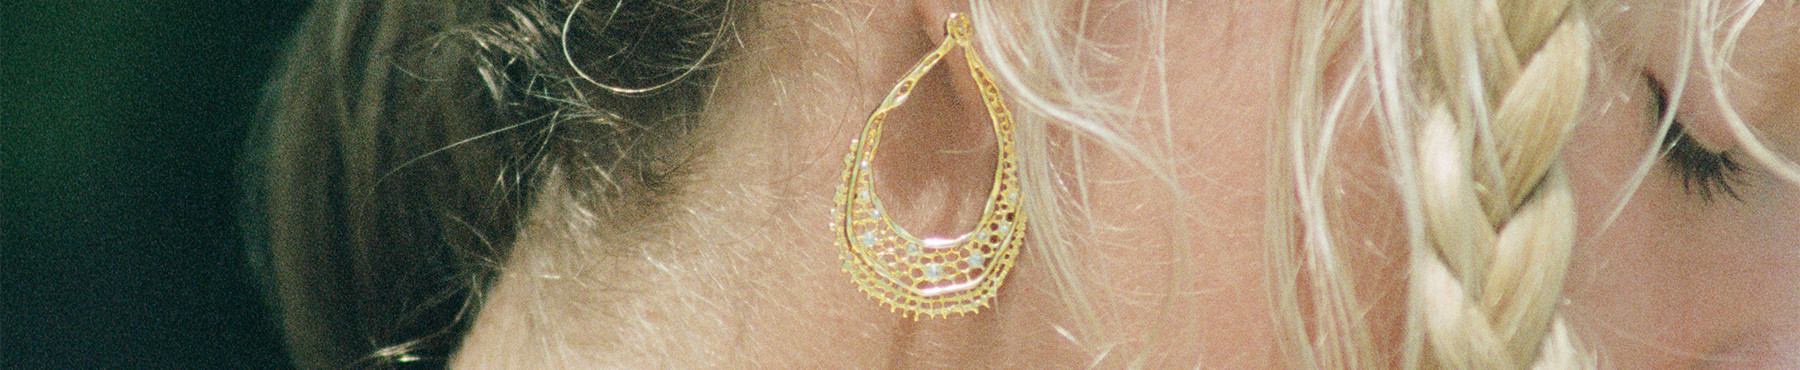 Aurélie Bidermann Lace jewelry